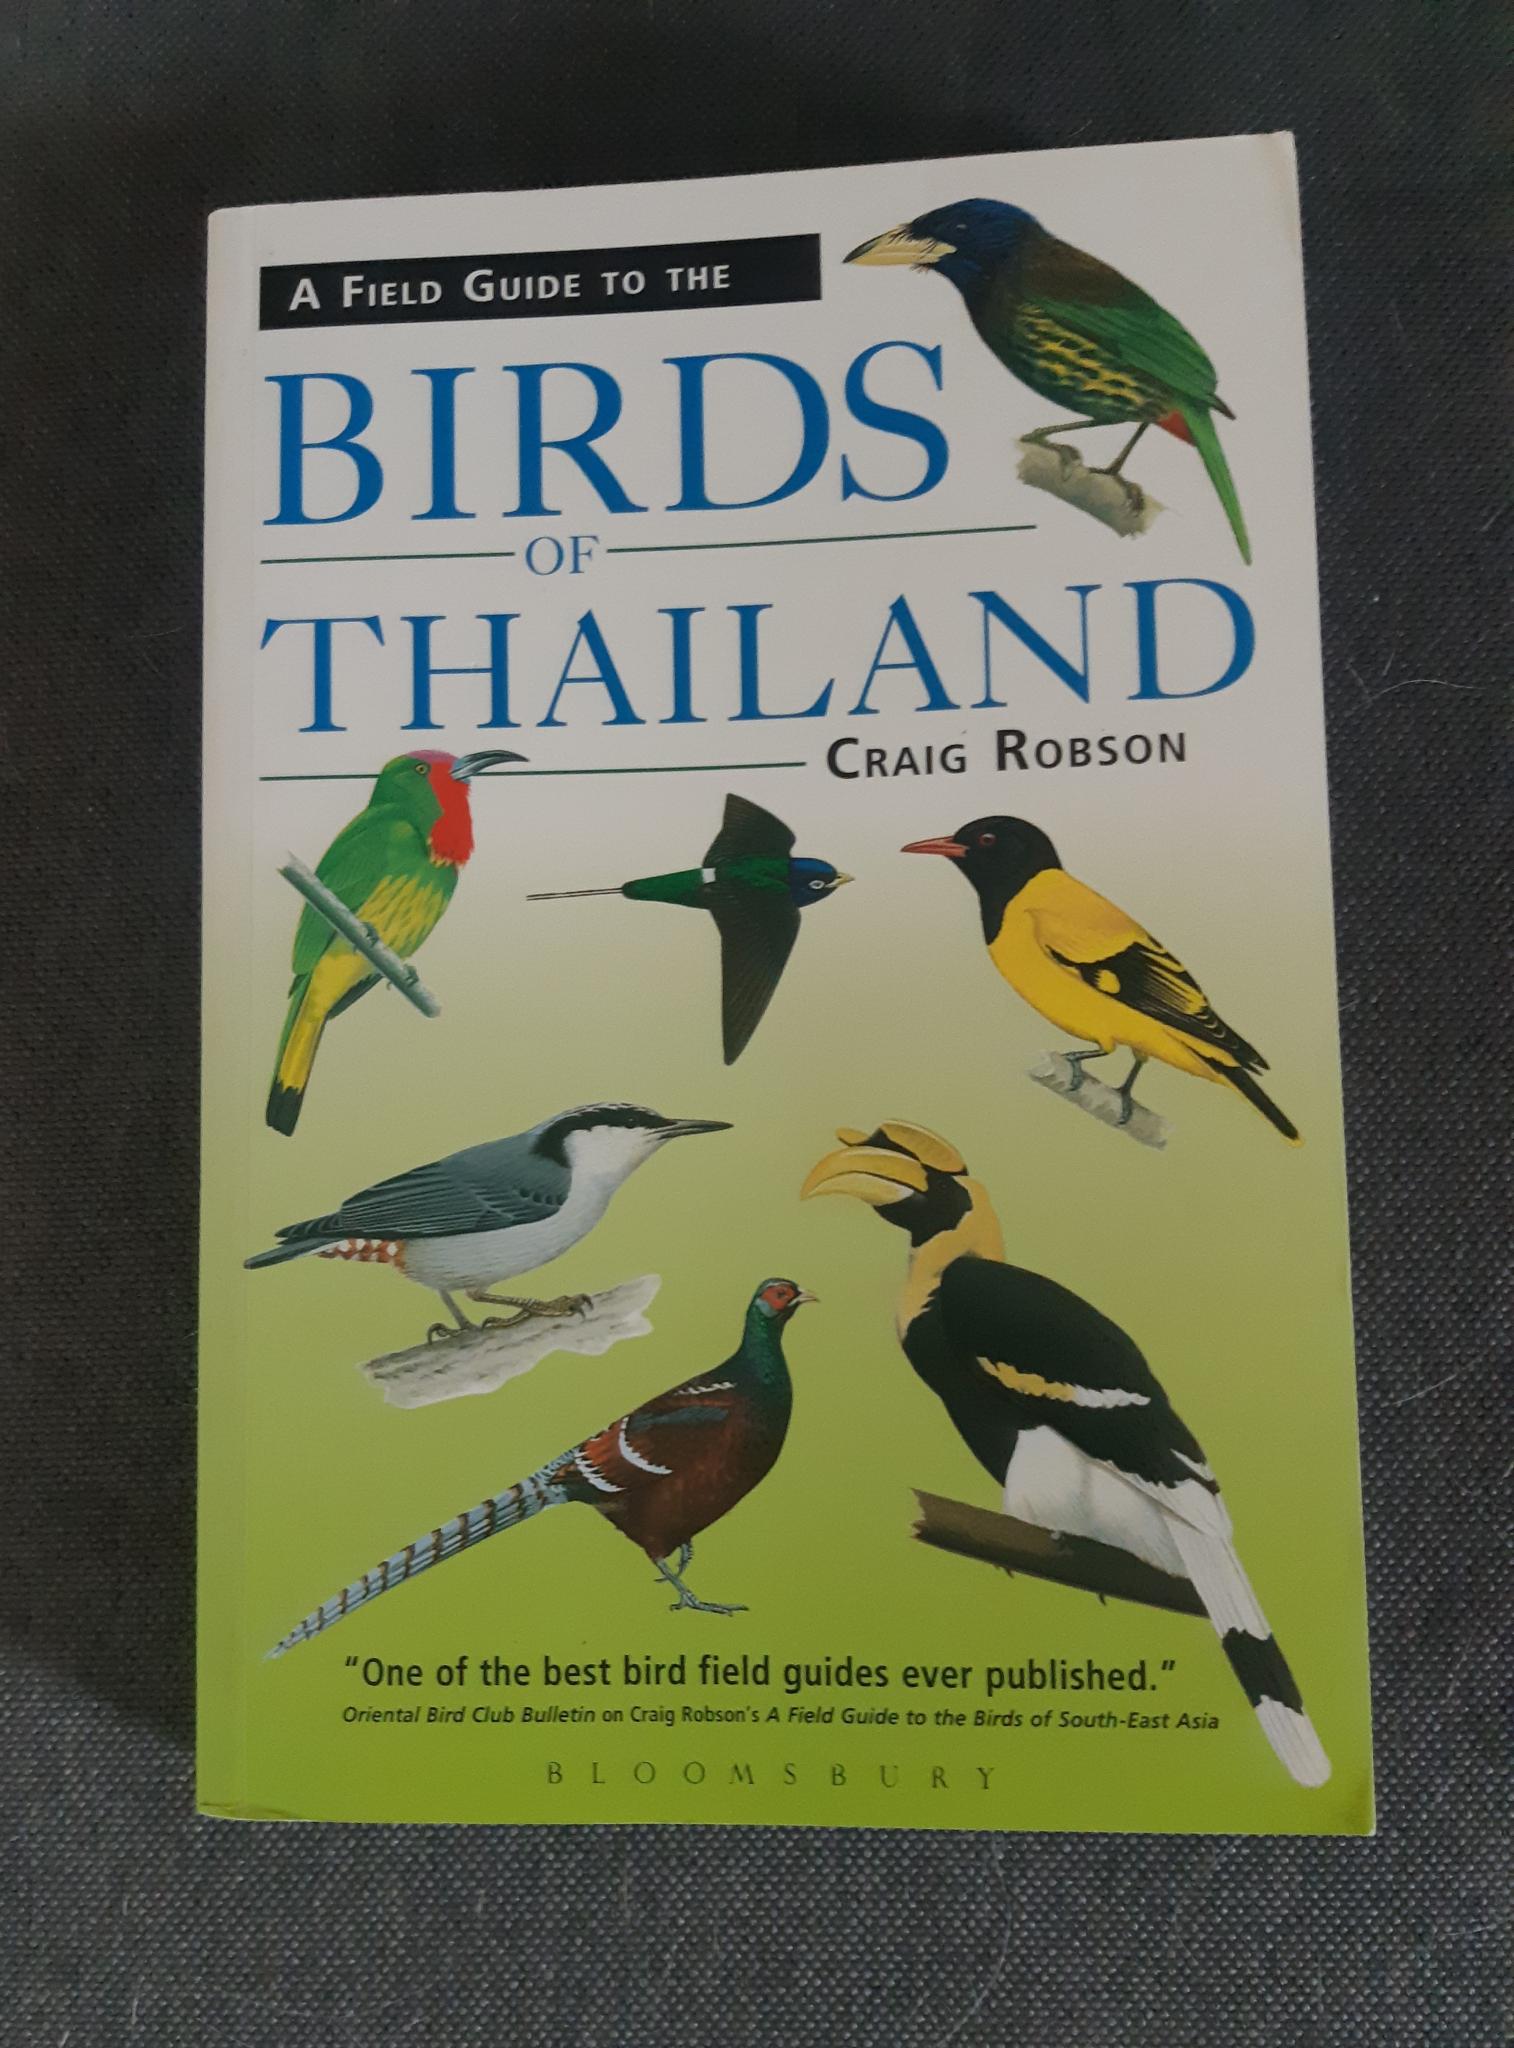 Thailand bird photos-birdsofthailand-jpg